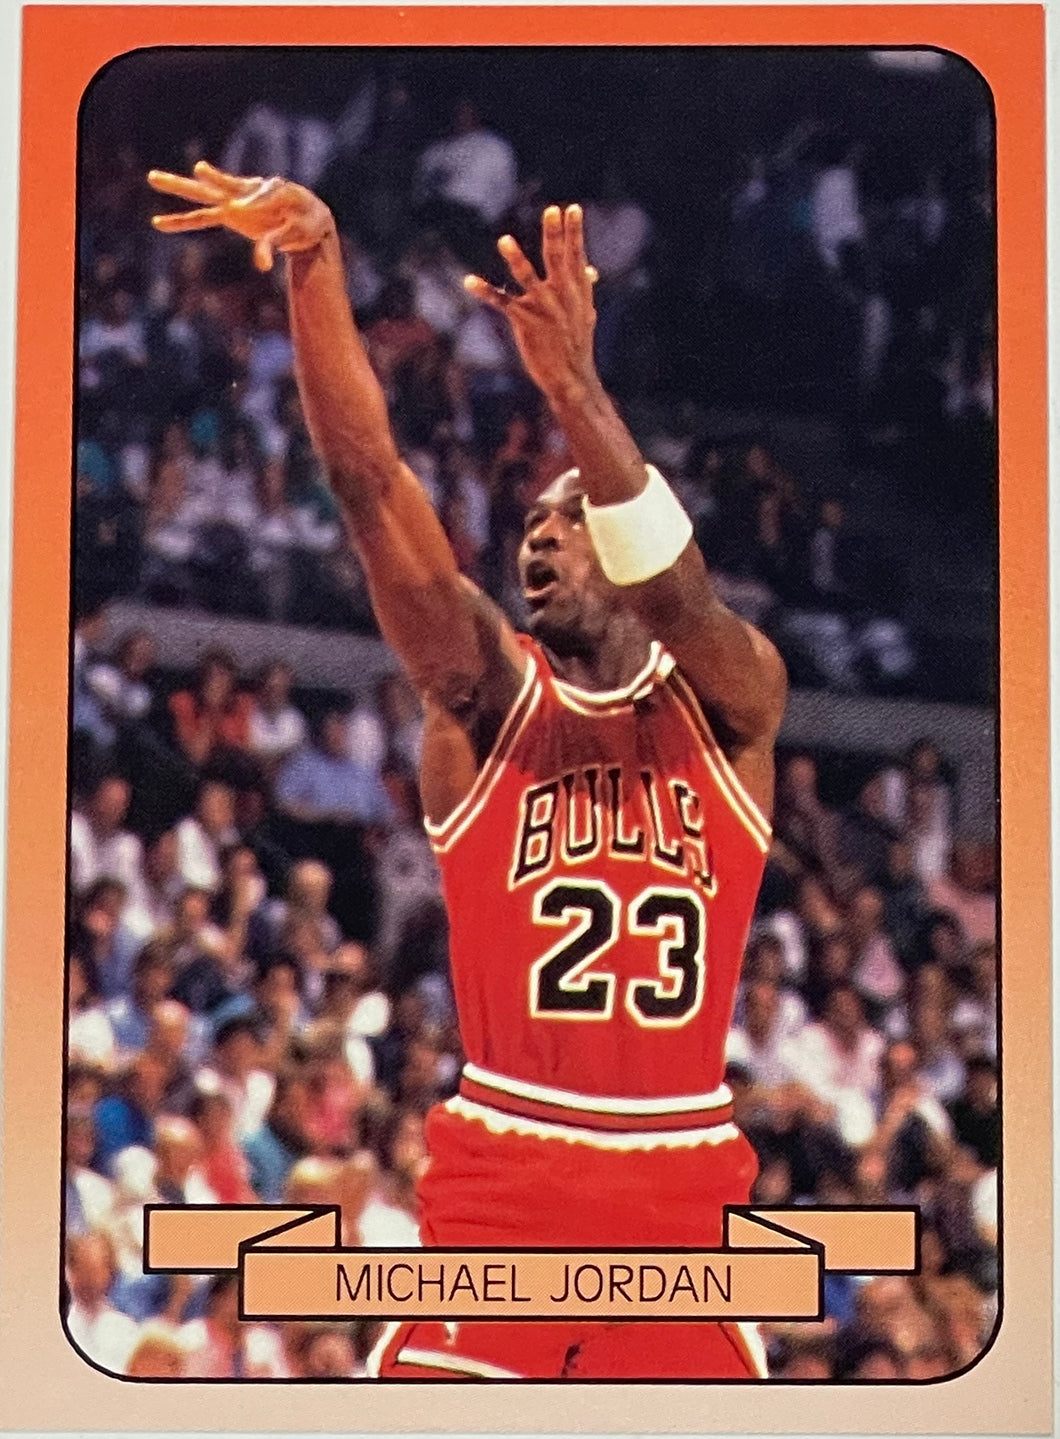 1990 Living Legend Michael Jordan Shooting Promo Card Bulls